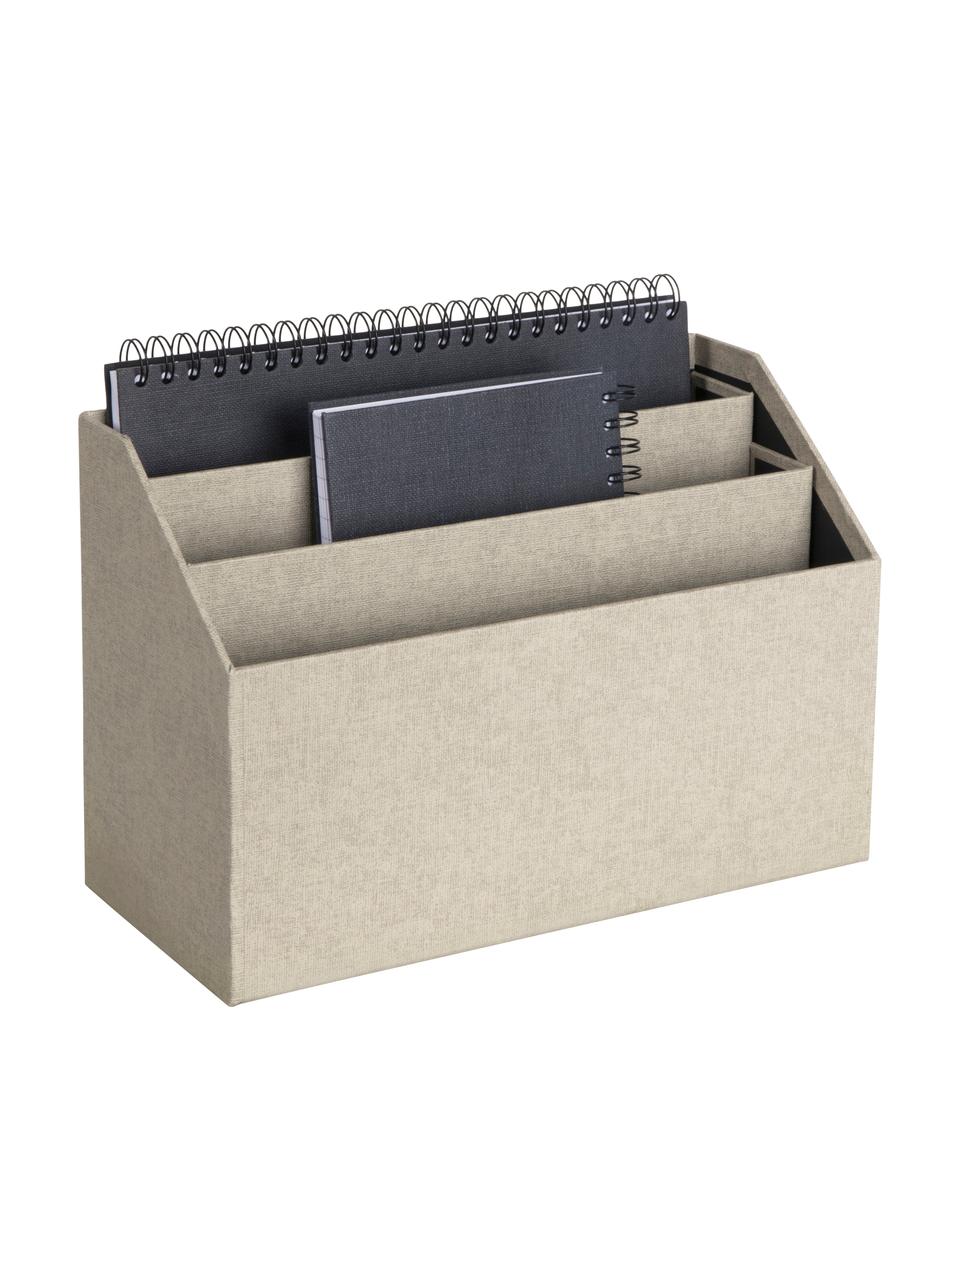 Büro-Organizer Hector, Canvas, fester Karton
(100 % recyceltes Papier), Beige, B 33 x T 16 cm